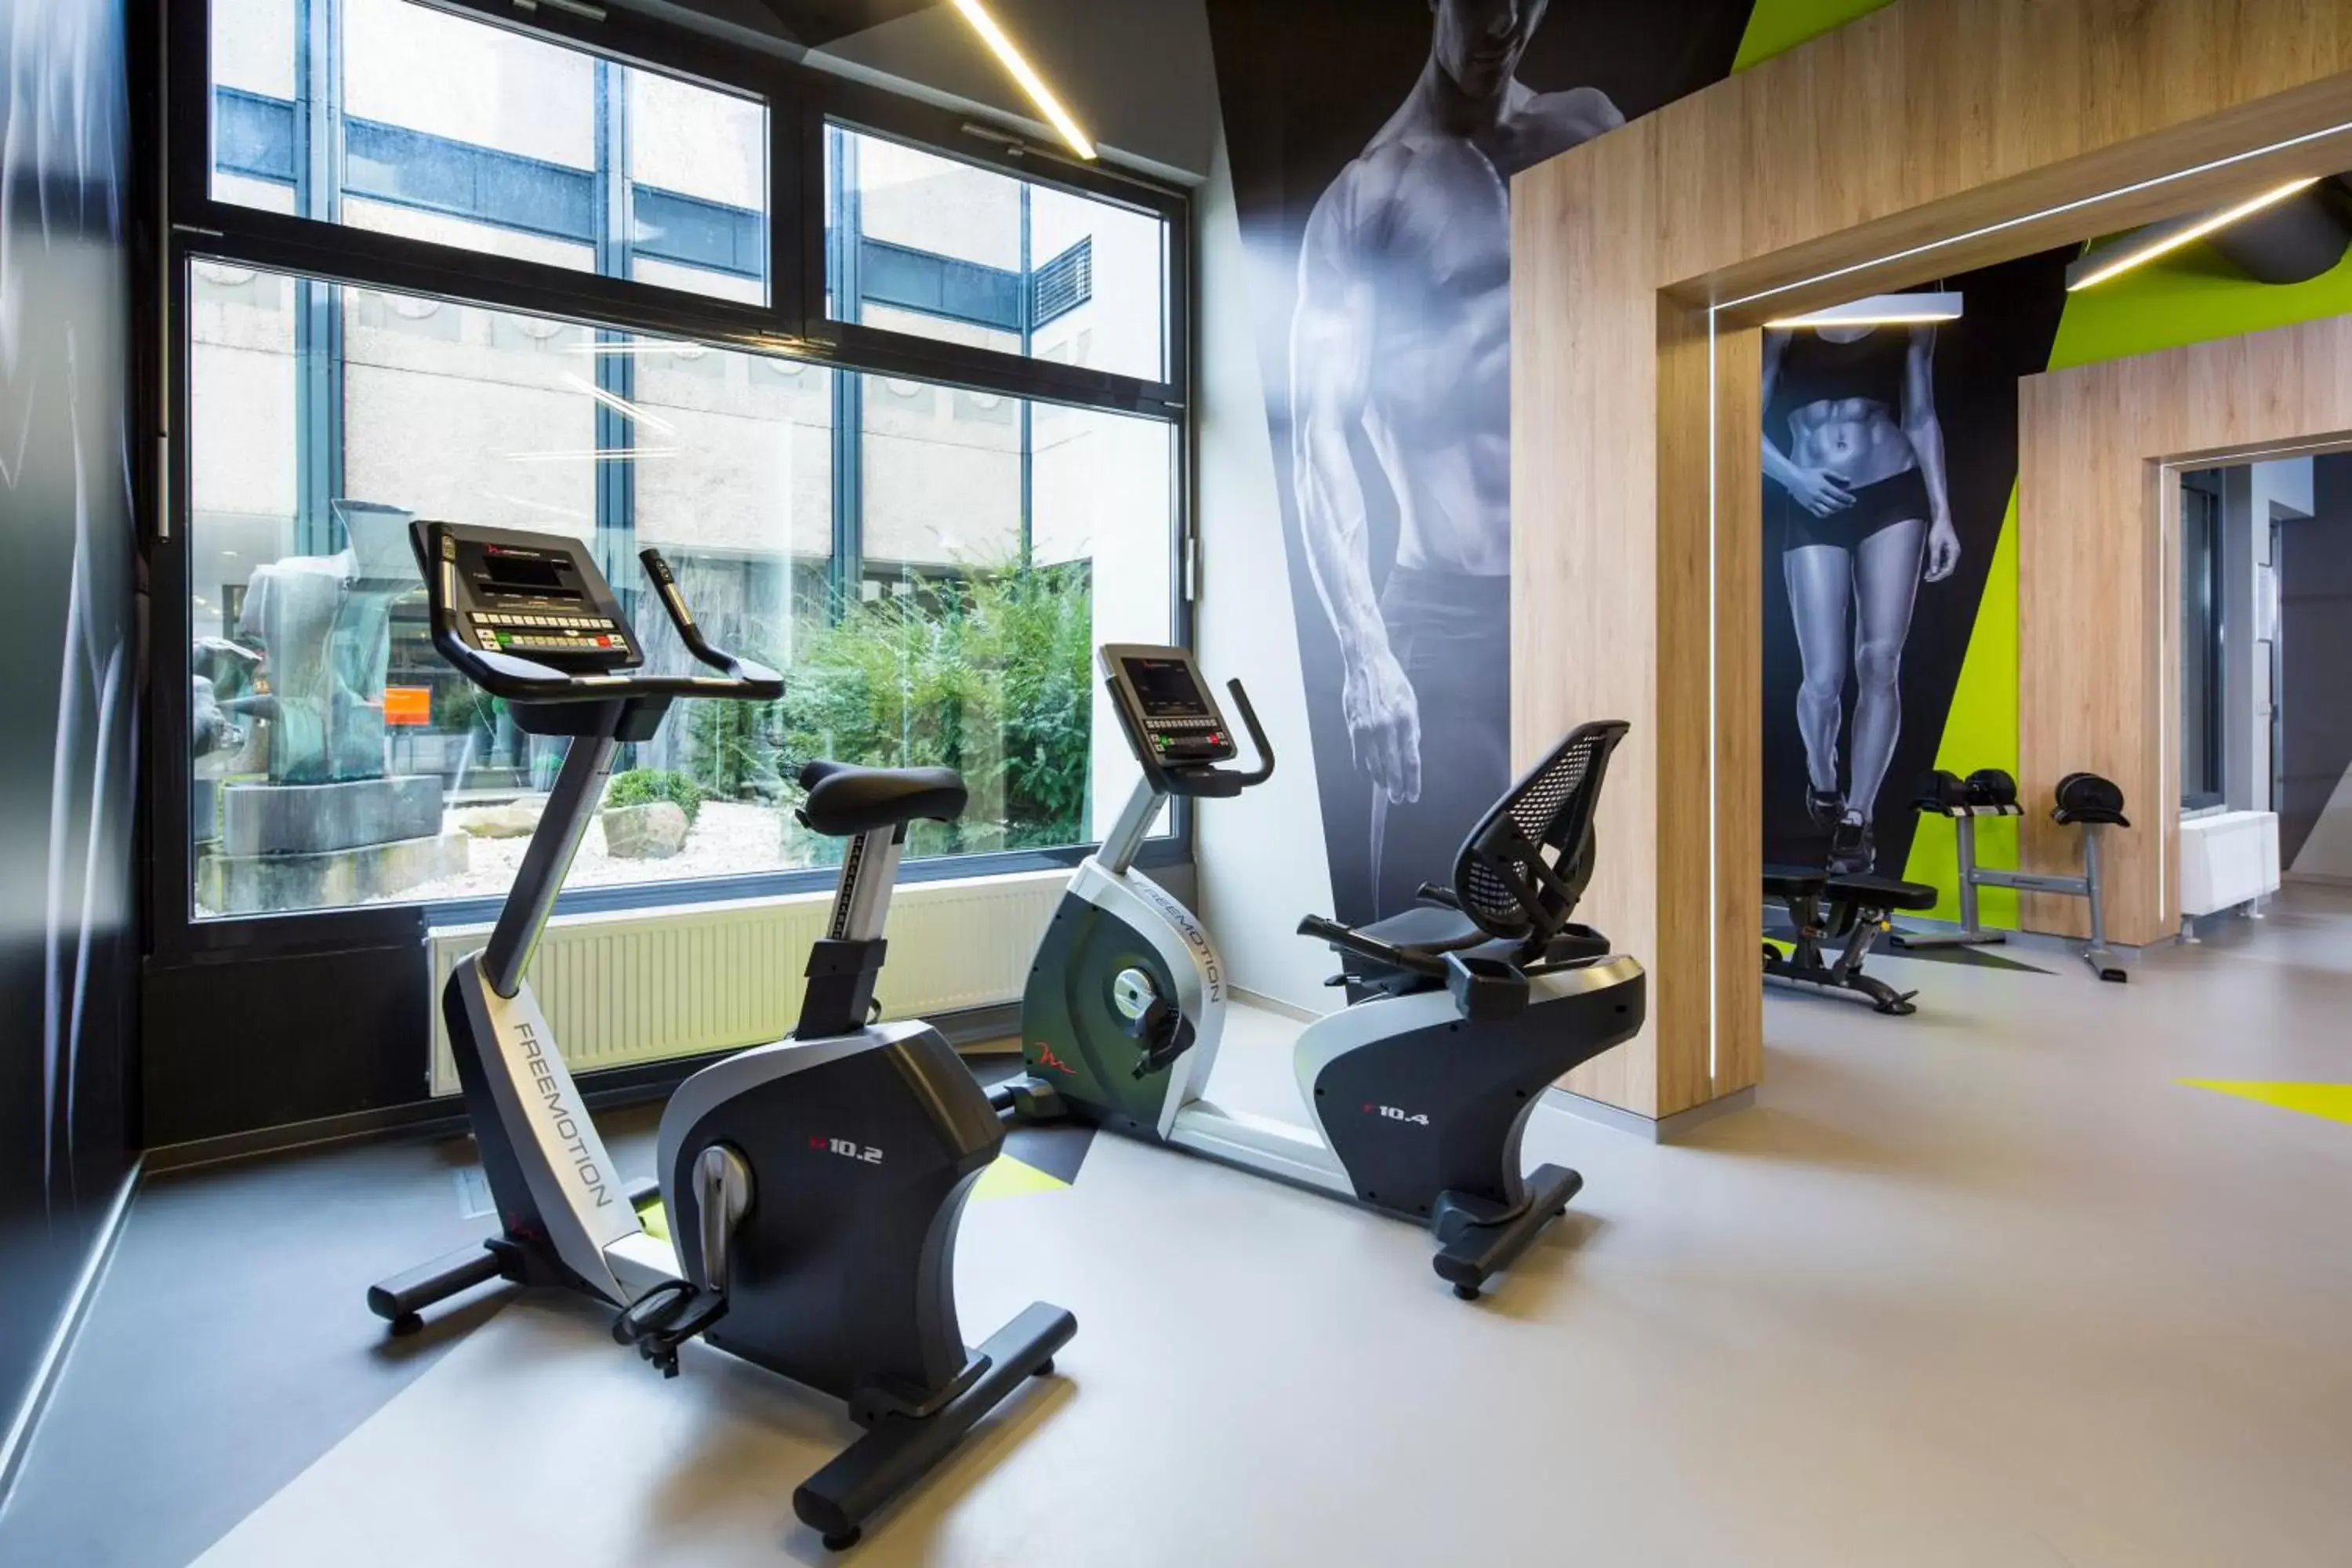 Fitness centre/facilities, Fitness Center/Facilities in OREA Congress Hotel Brno